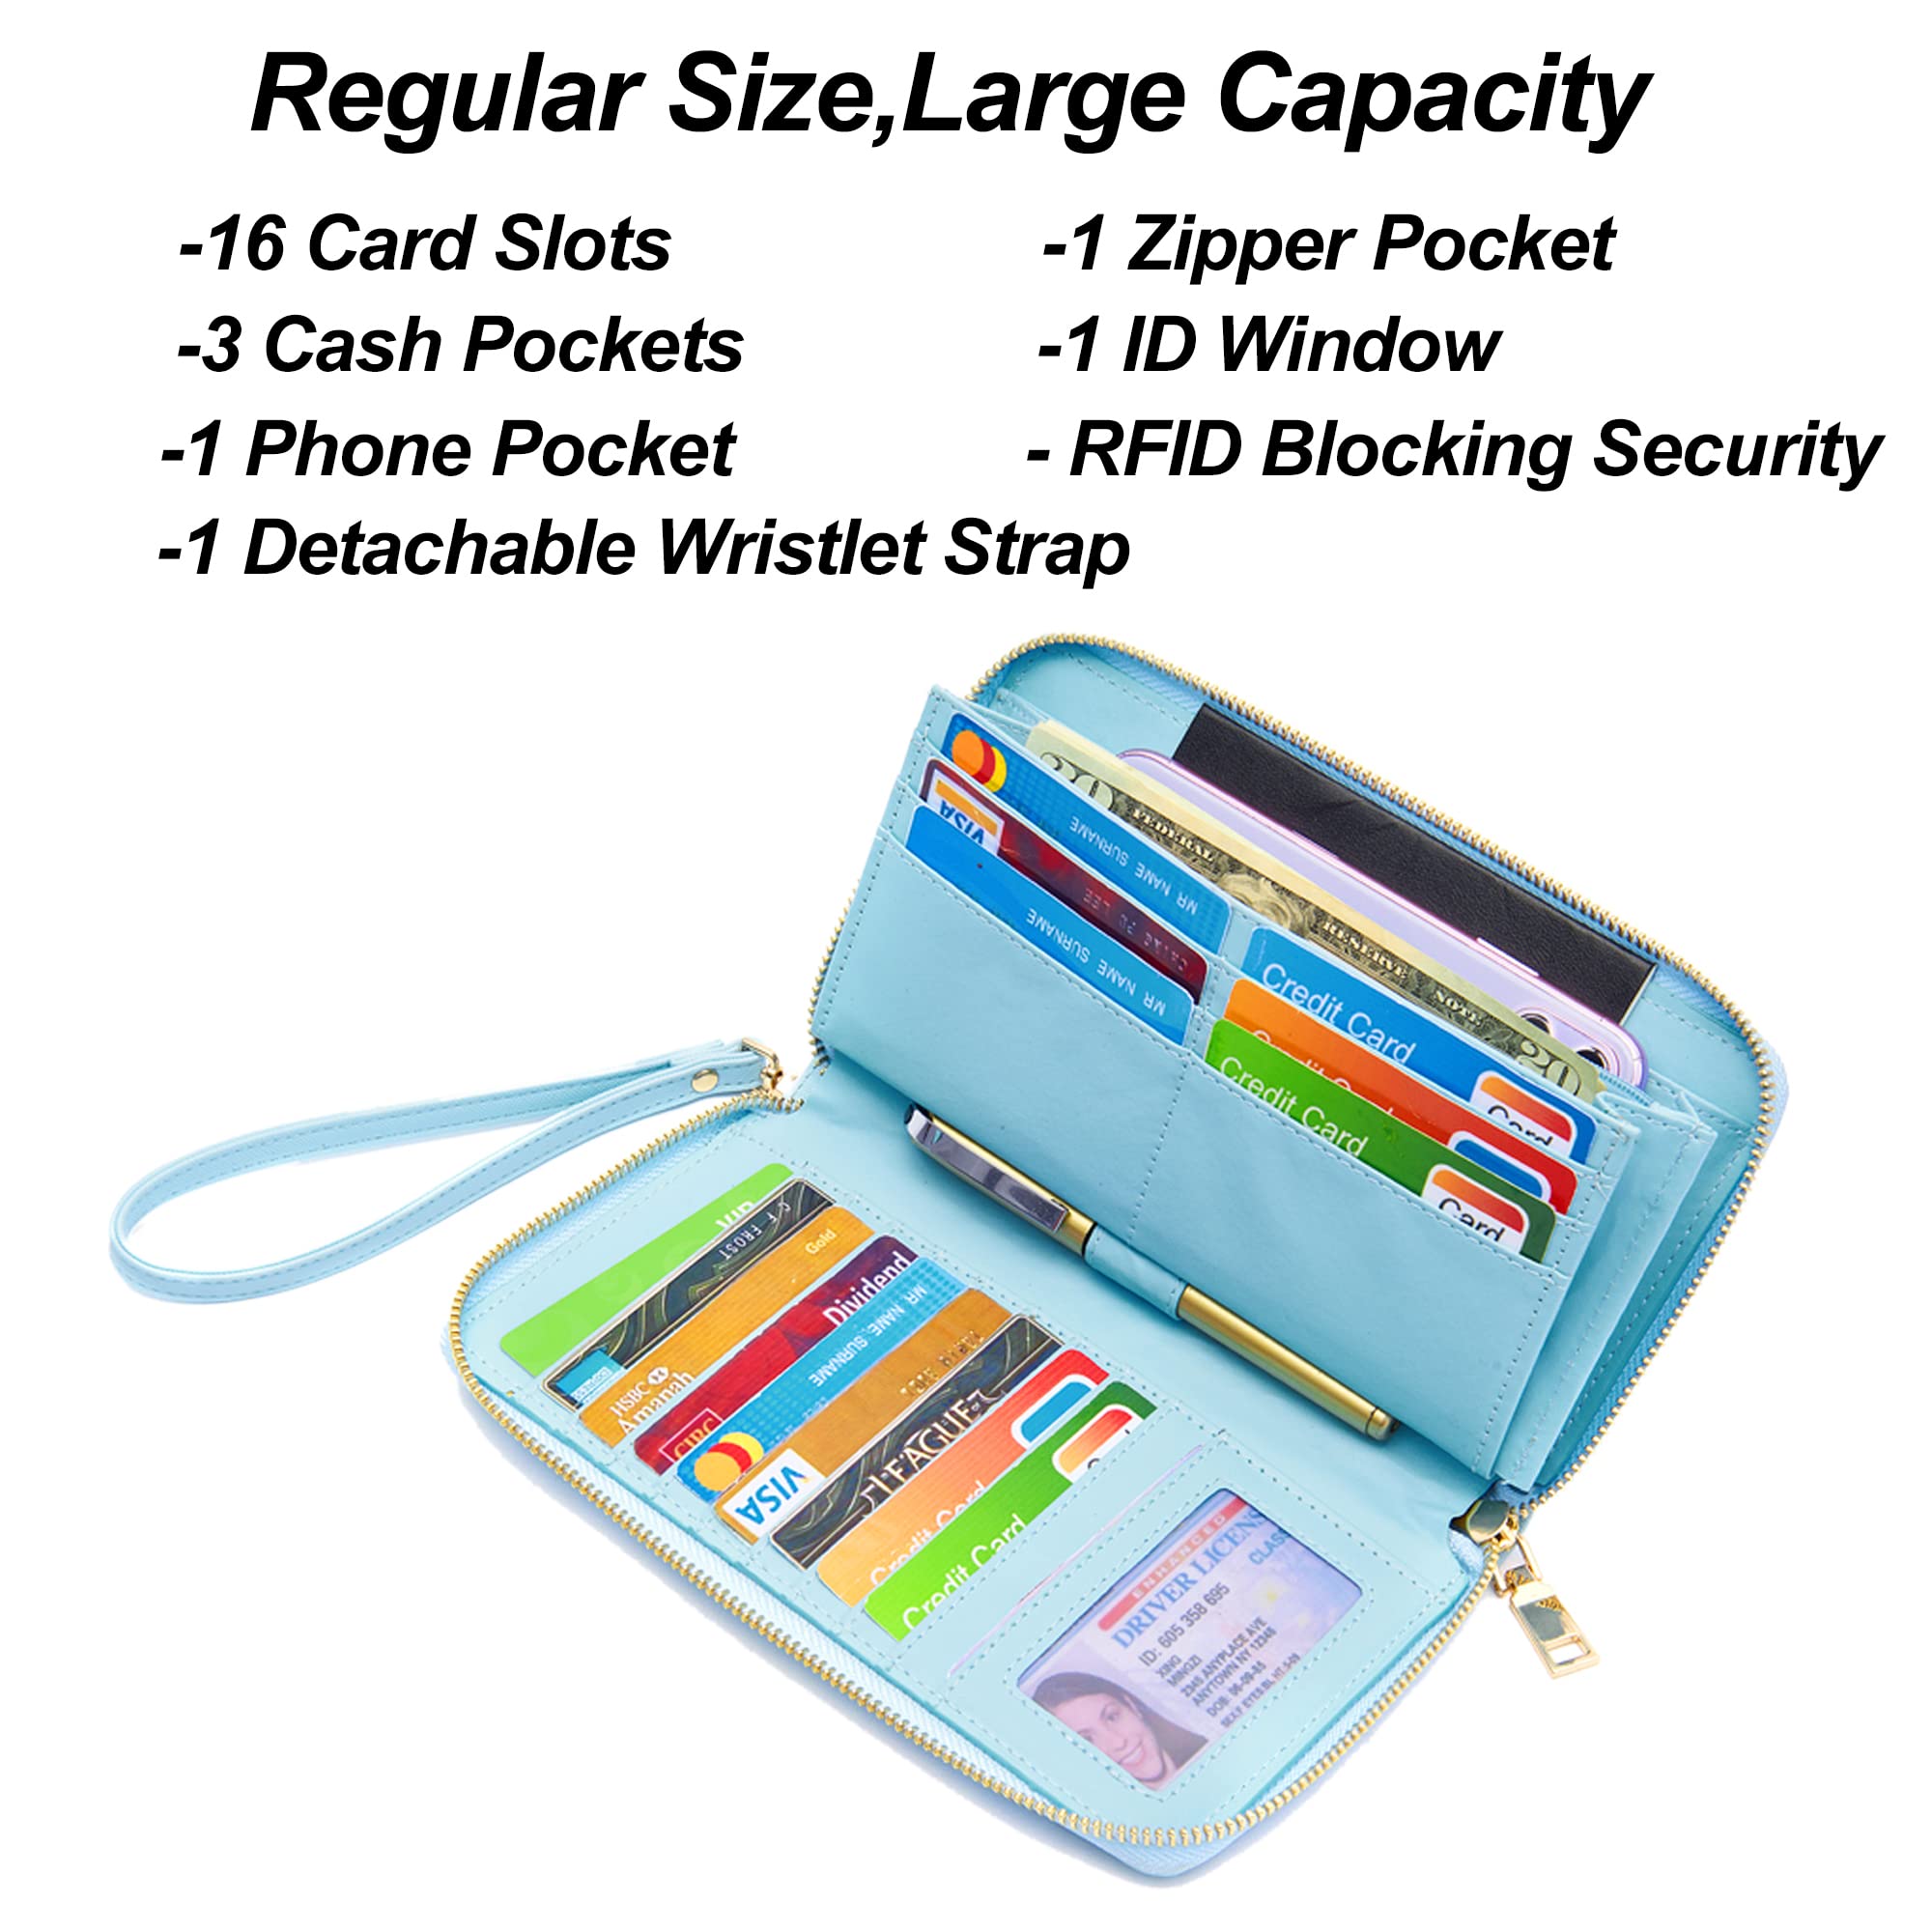 YZAOLL Purse Handbag for Women Large Satchel Tote Shoulder Purses Wallet set